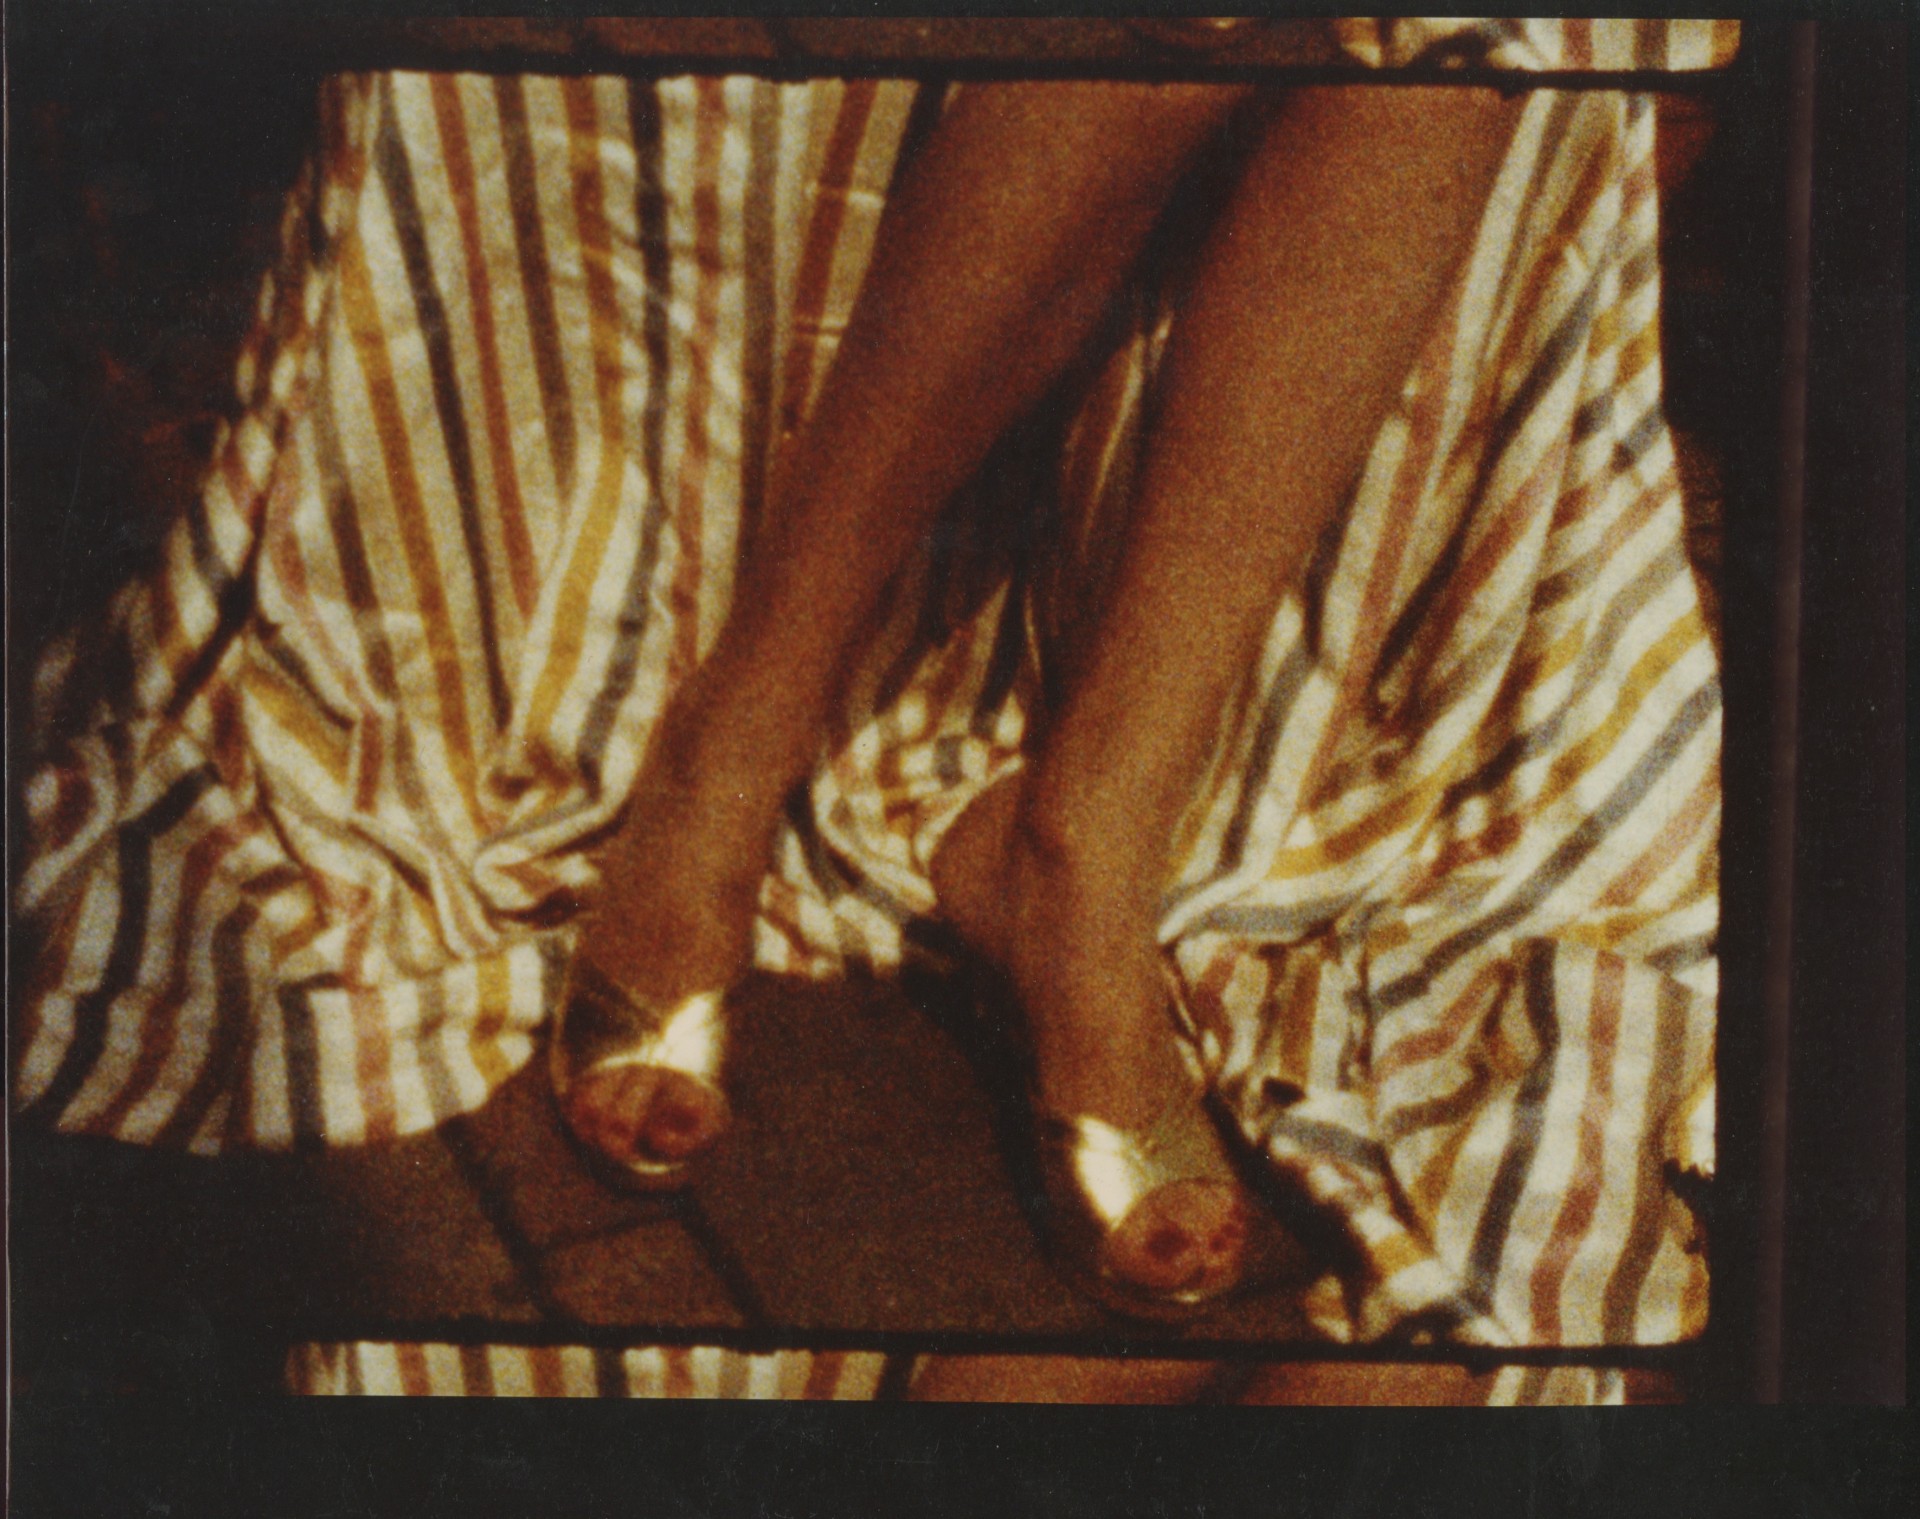 Marja Samsom, *Shaving Legs*, 1974, Super 8 Film